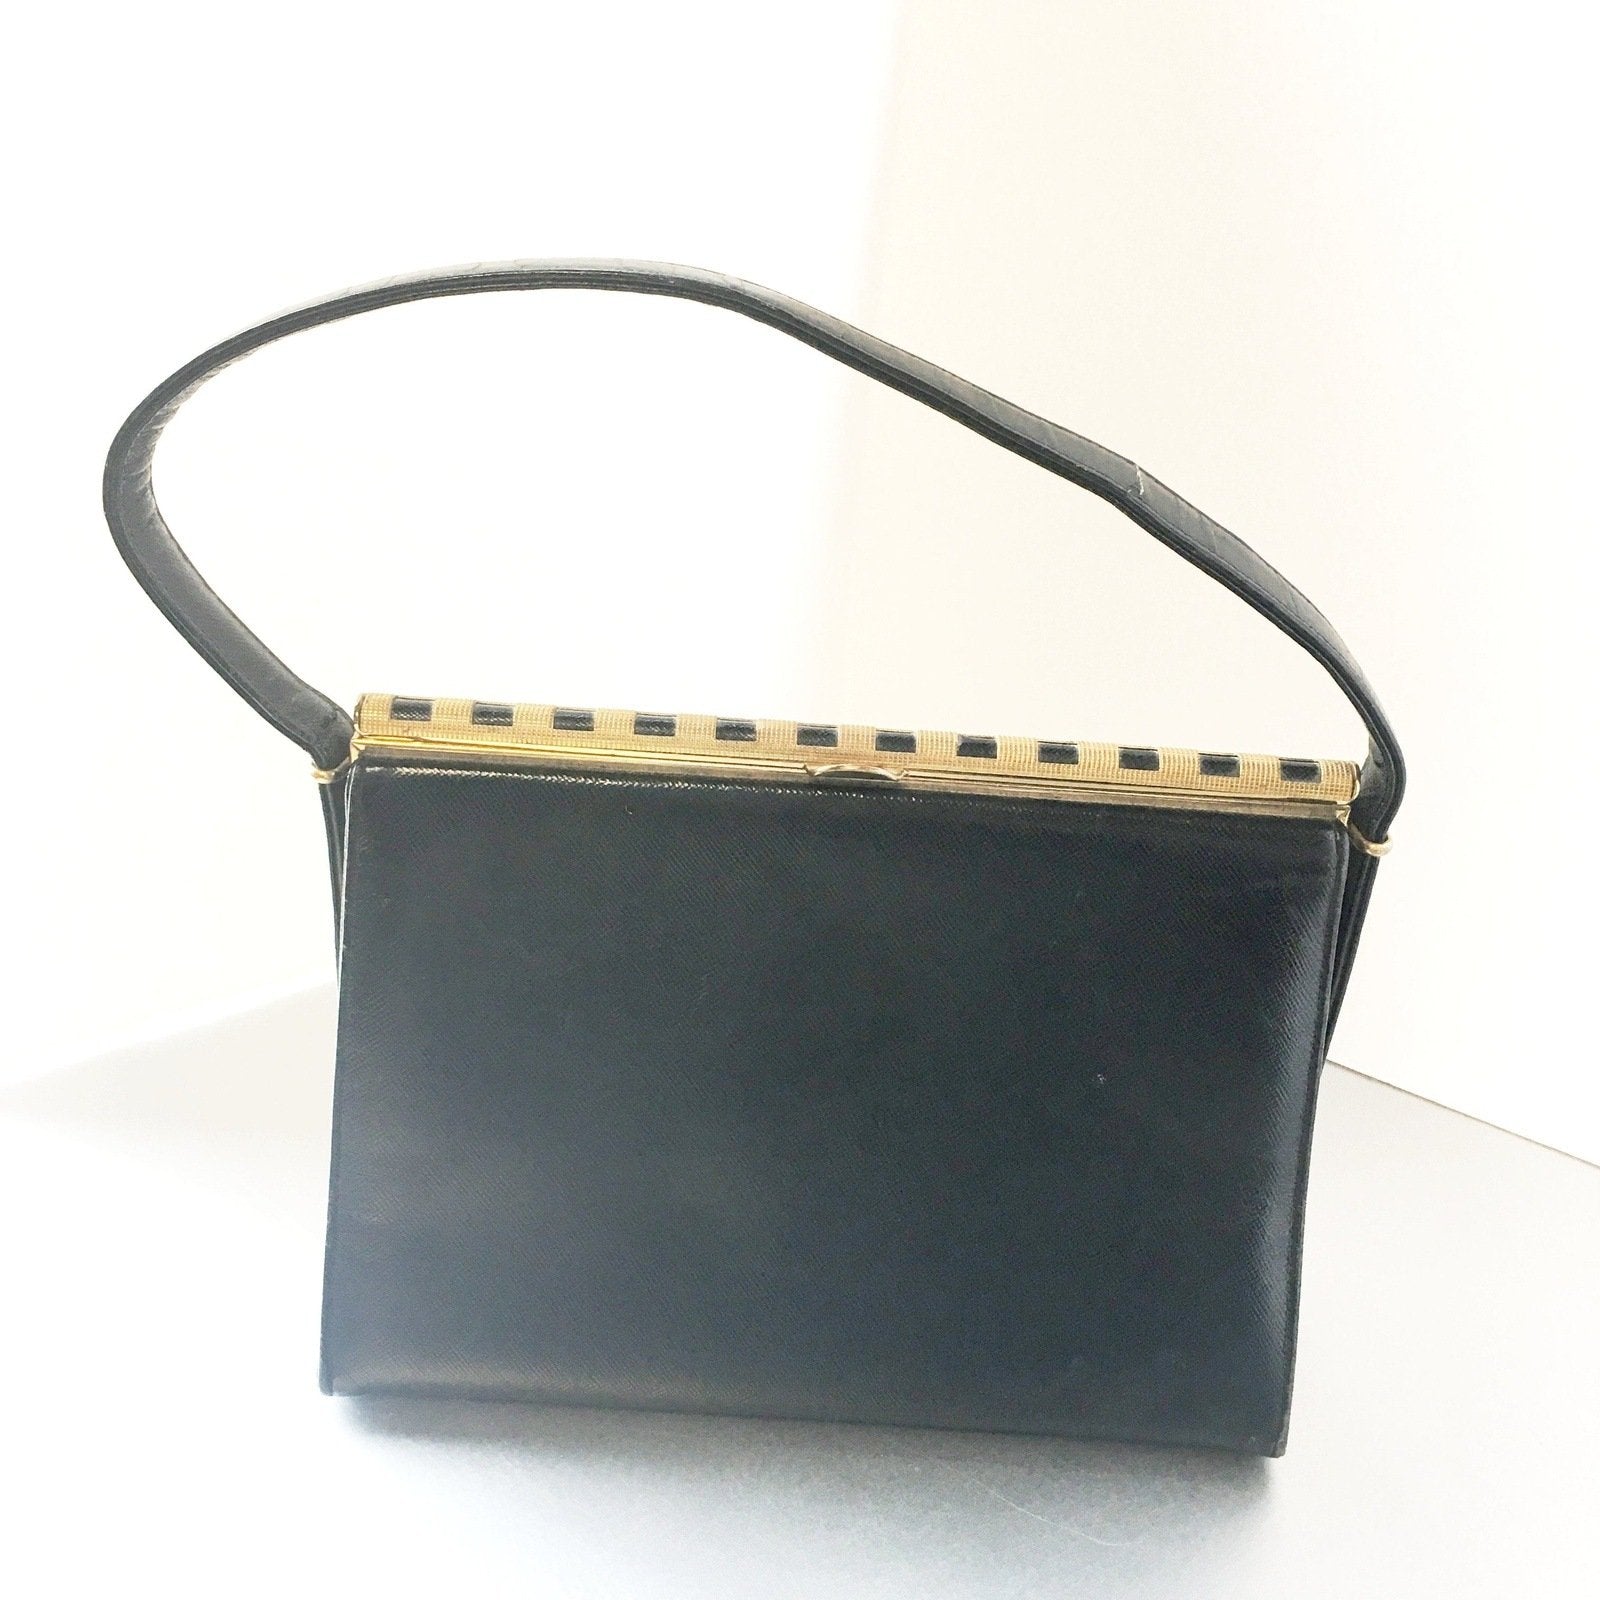 Vintage 1950s Black Patent Leather Coblentz Original Handbag